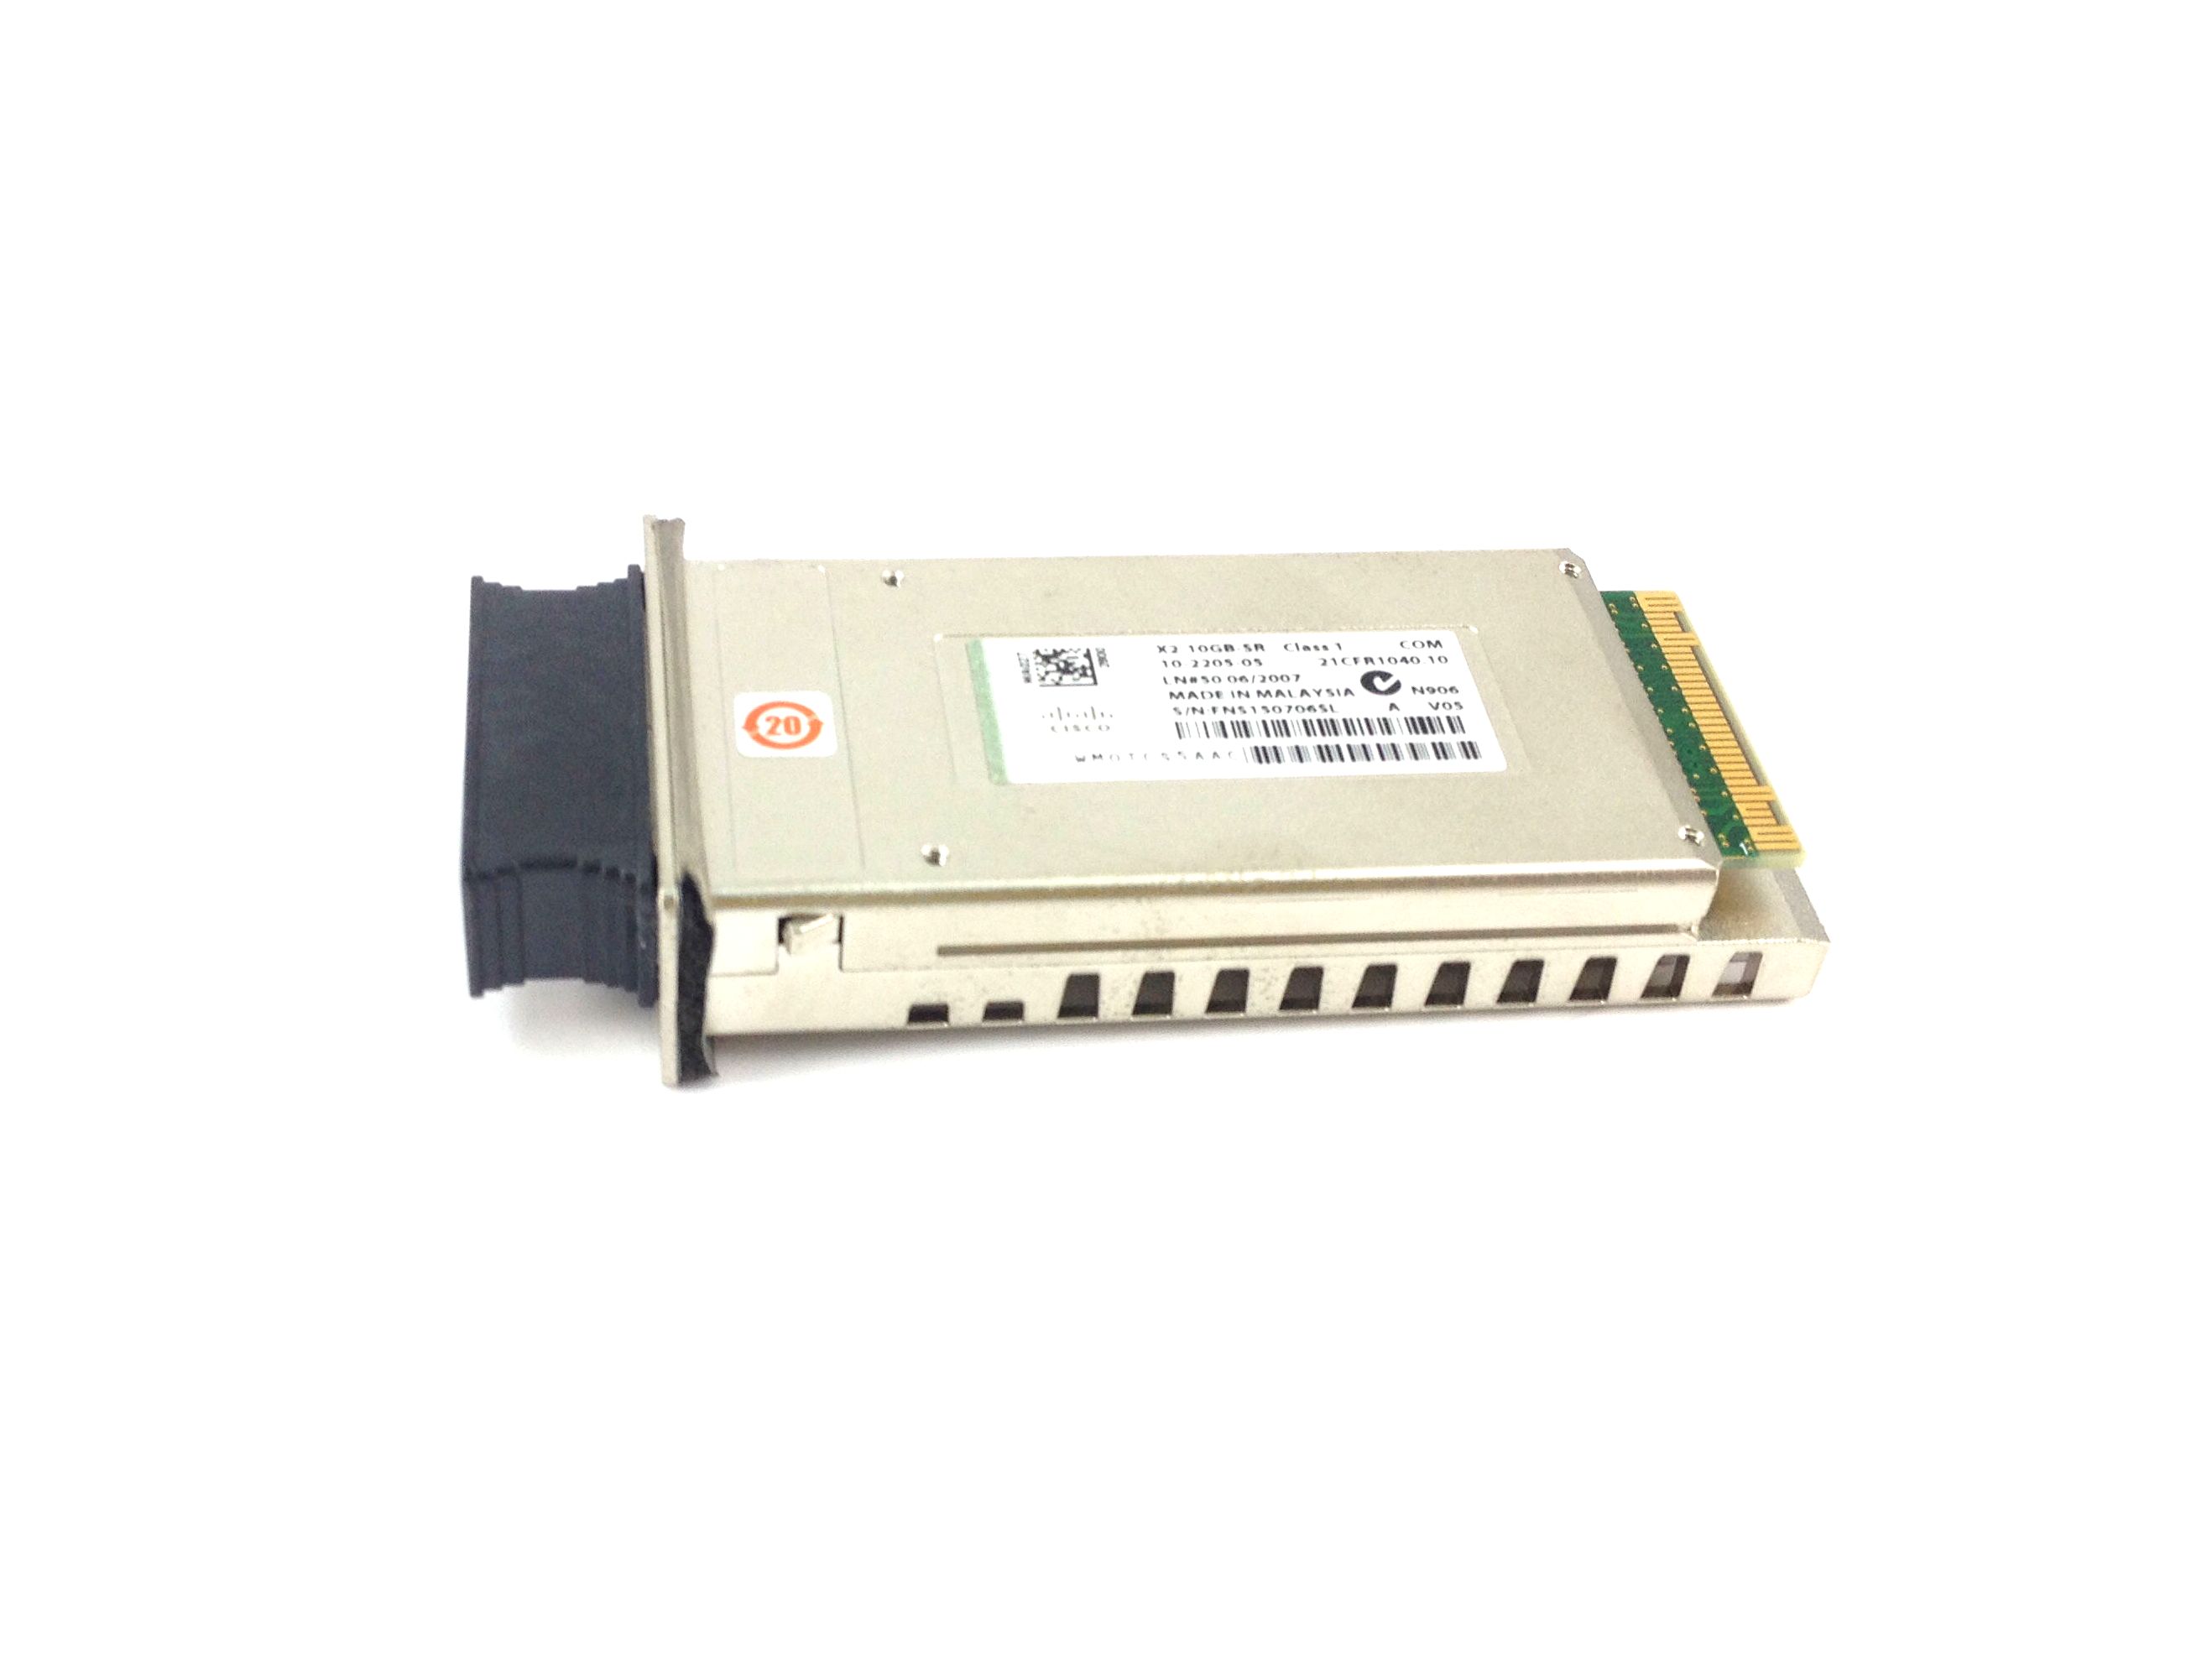 Cisco 10Gbase Server Transceiver Module (X2-10GB-SR)